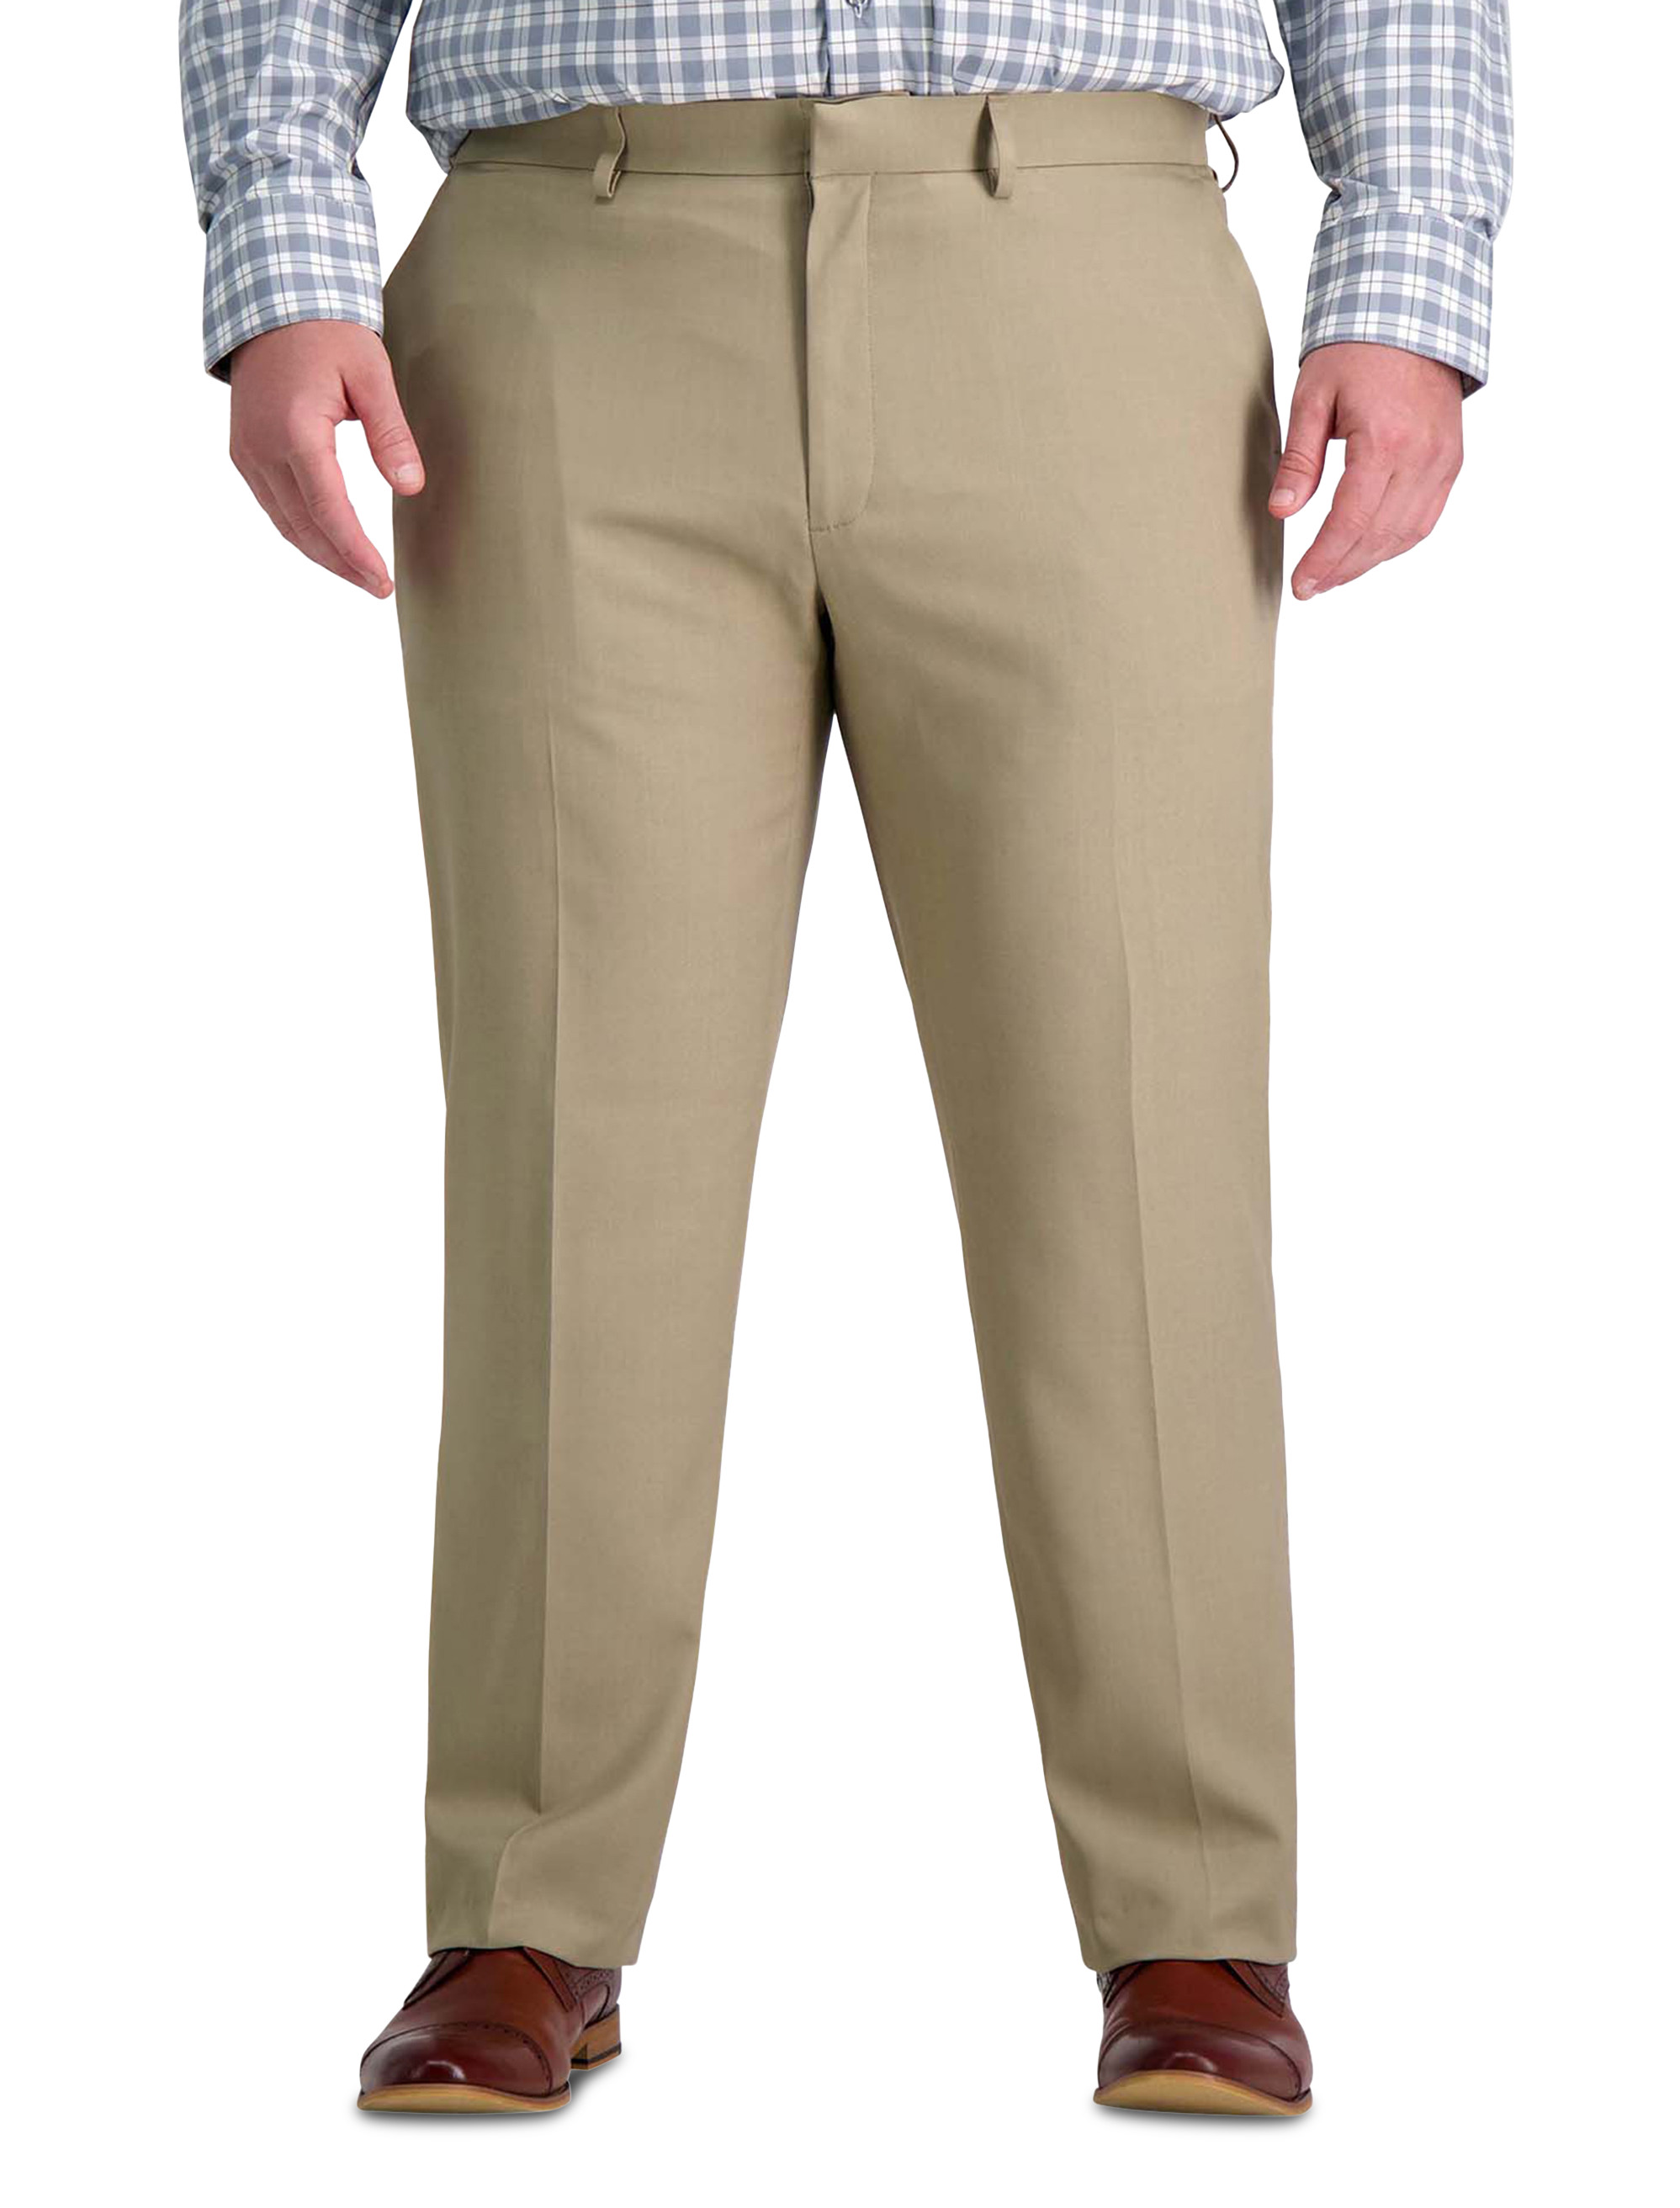 Long Pants For Men Men Dress Pants,Casual Plaid Flat-Front Skinny